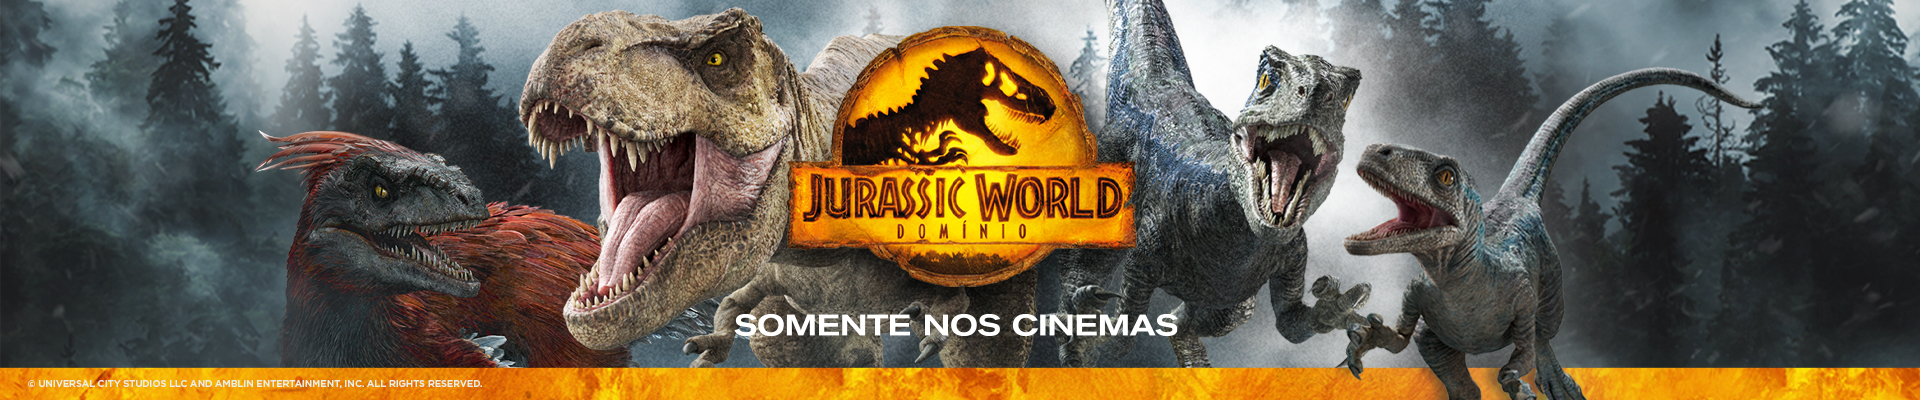 Jurassic World 01